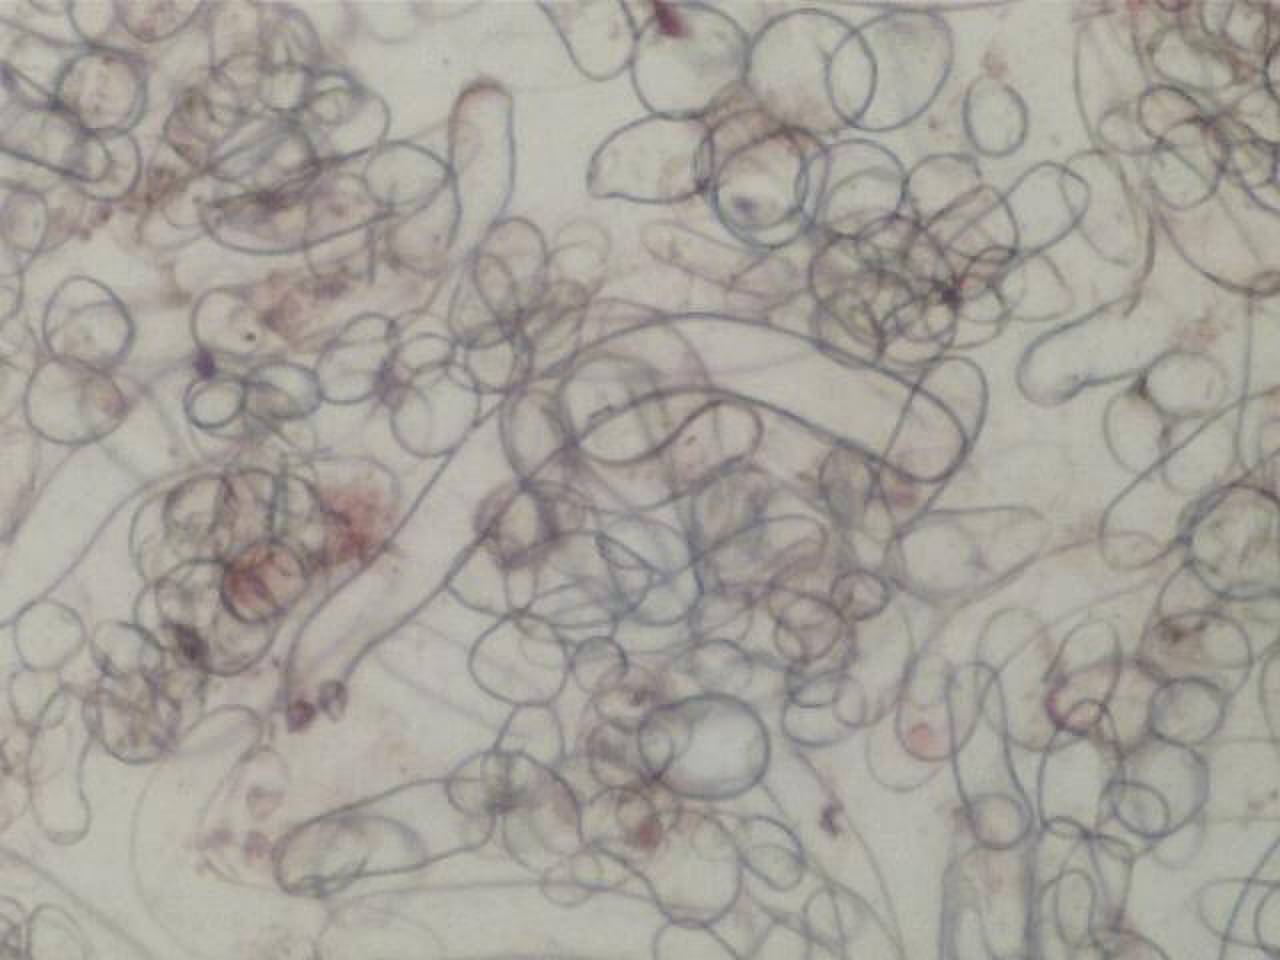 Суспензионная культура клеток Tribulus terrestris под микроскопом